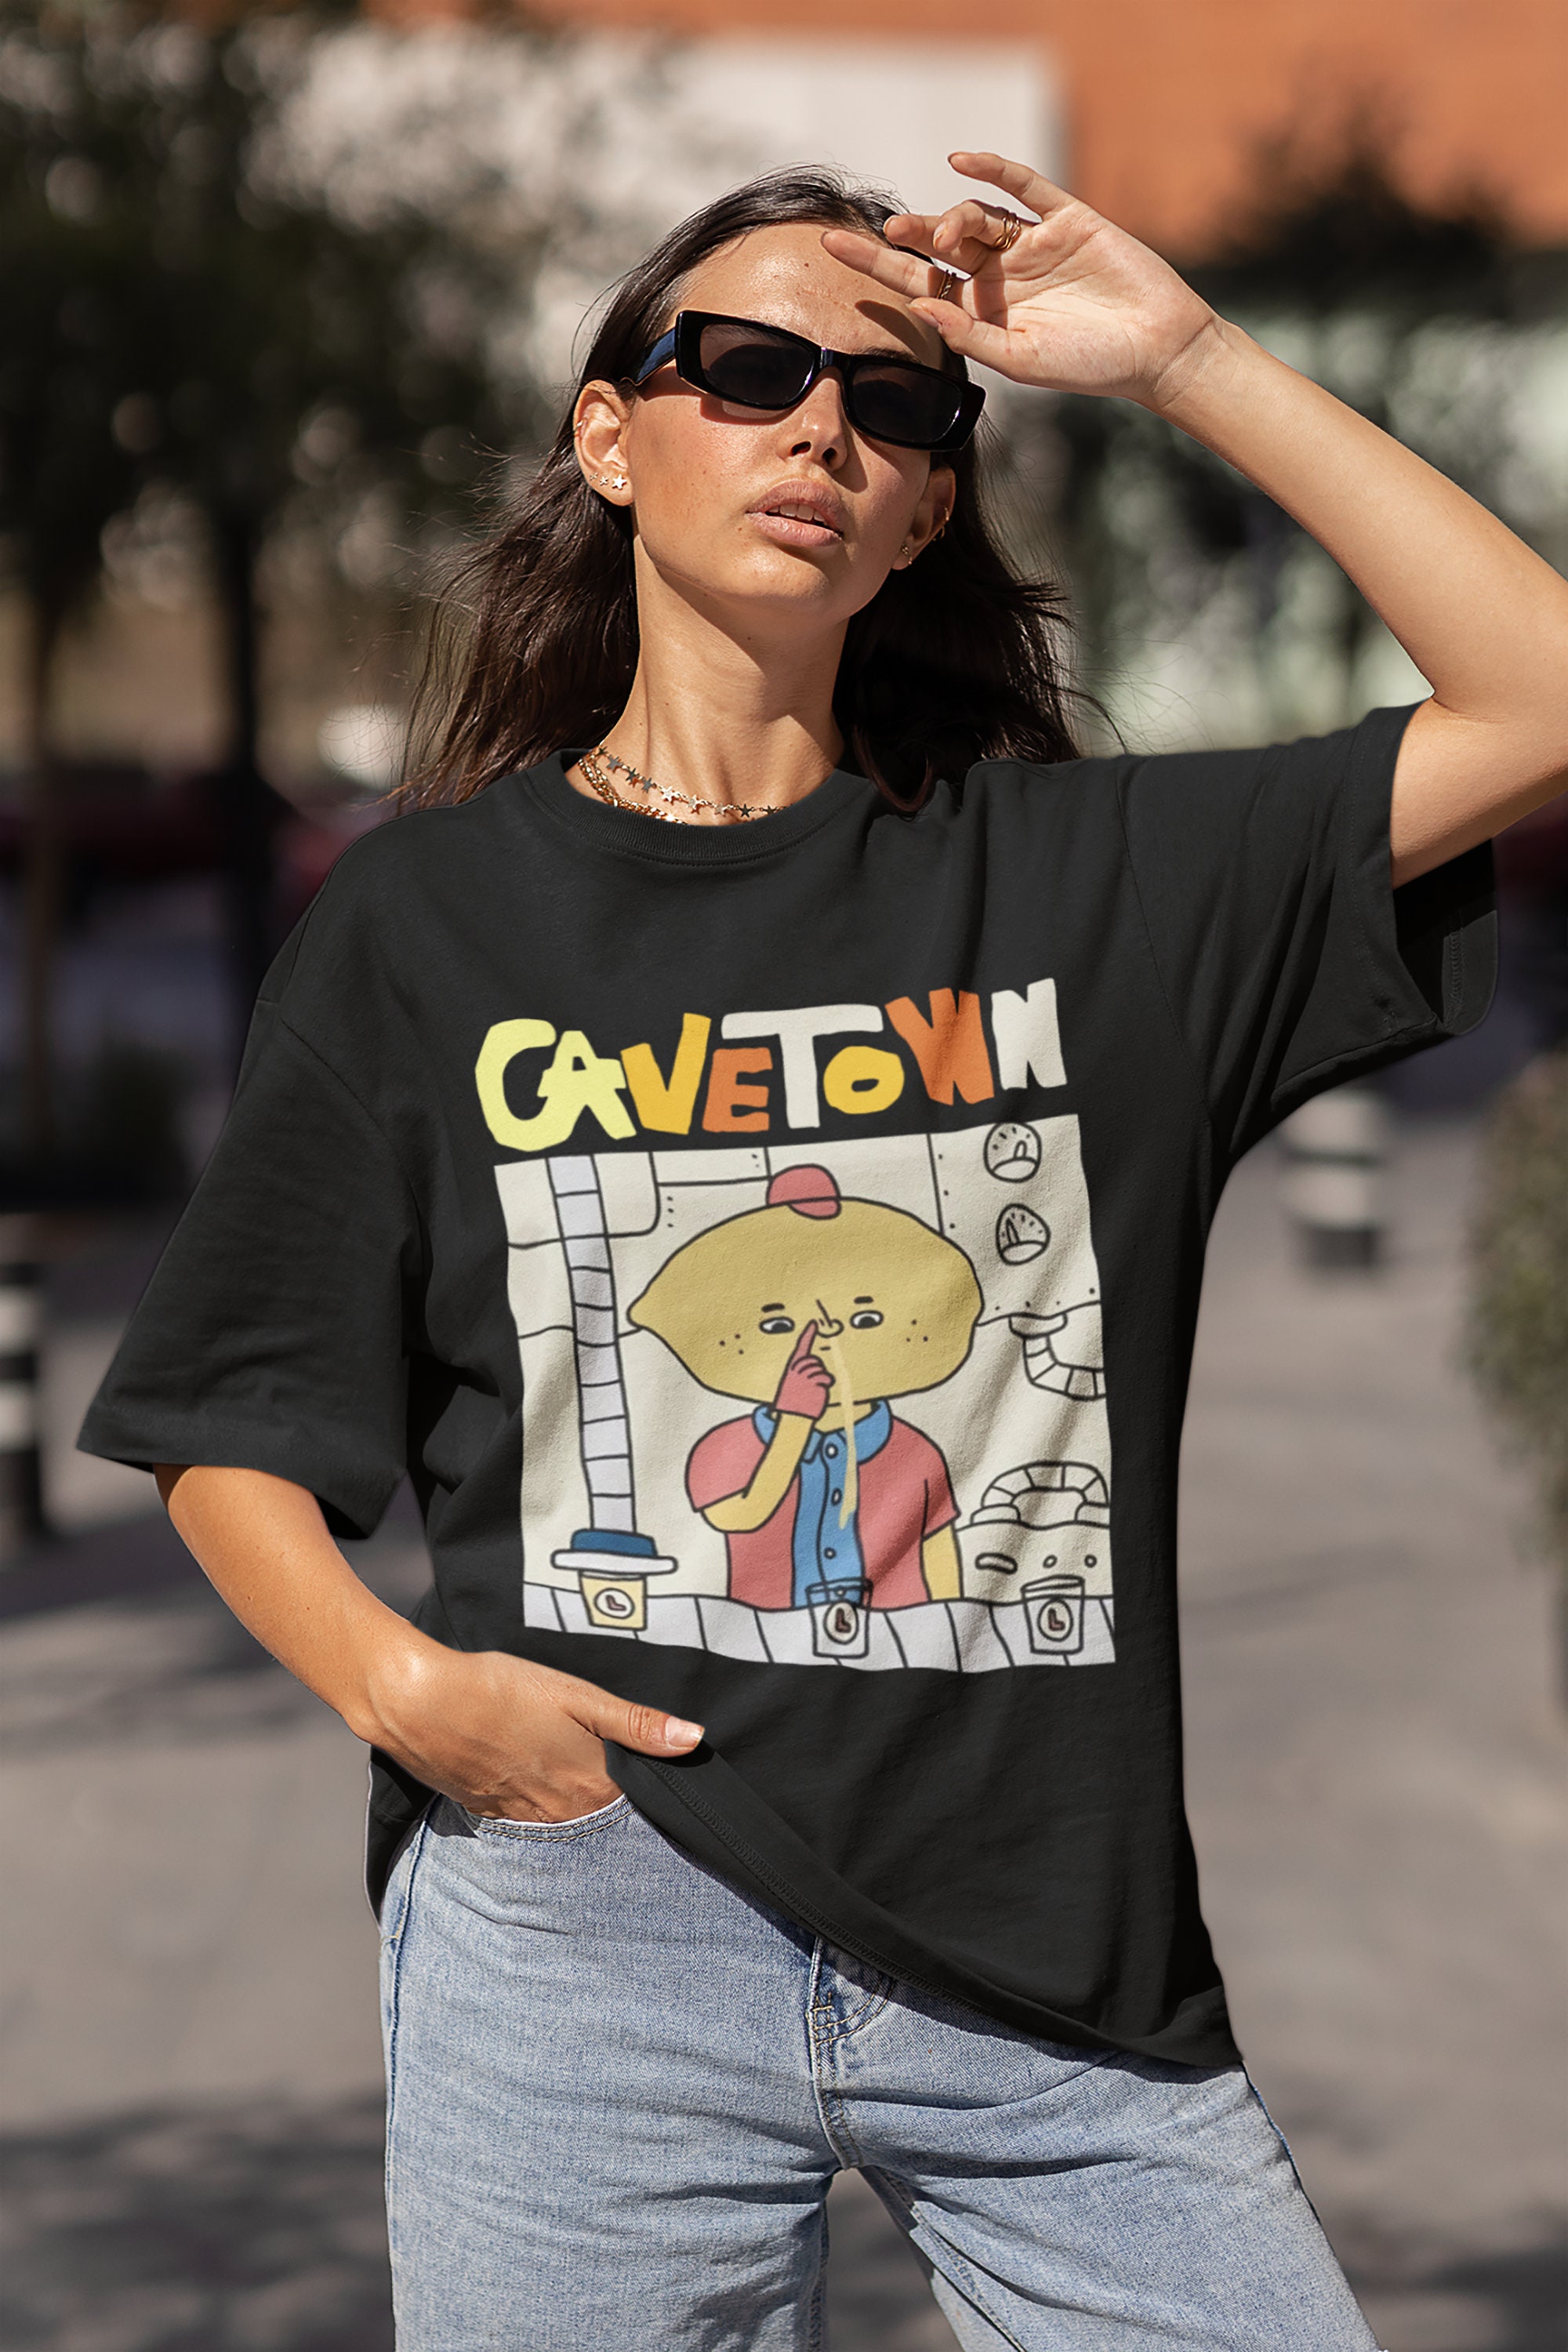 Cavetown Lemonboy Shirt, Cavetown merch, Cavetown shirt, Lemon Boy, This is Home